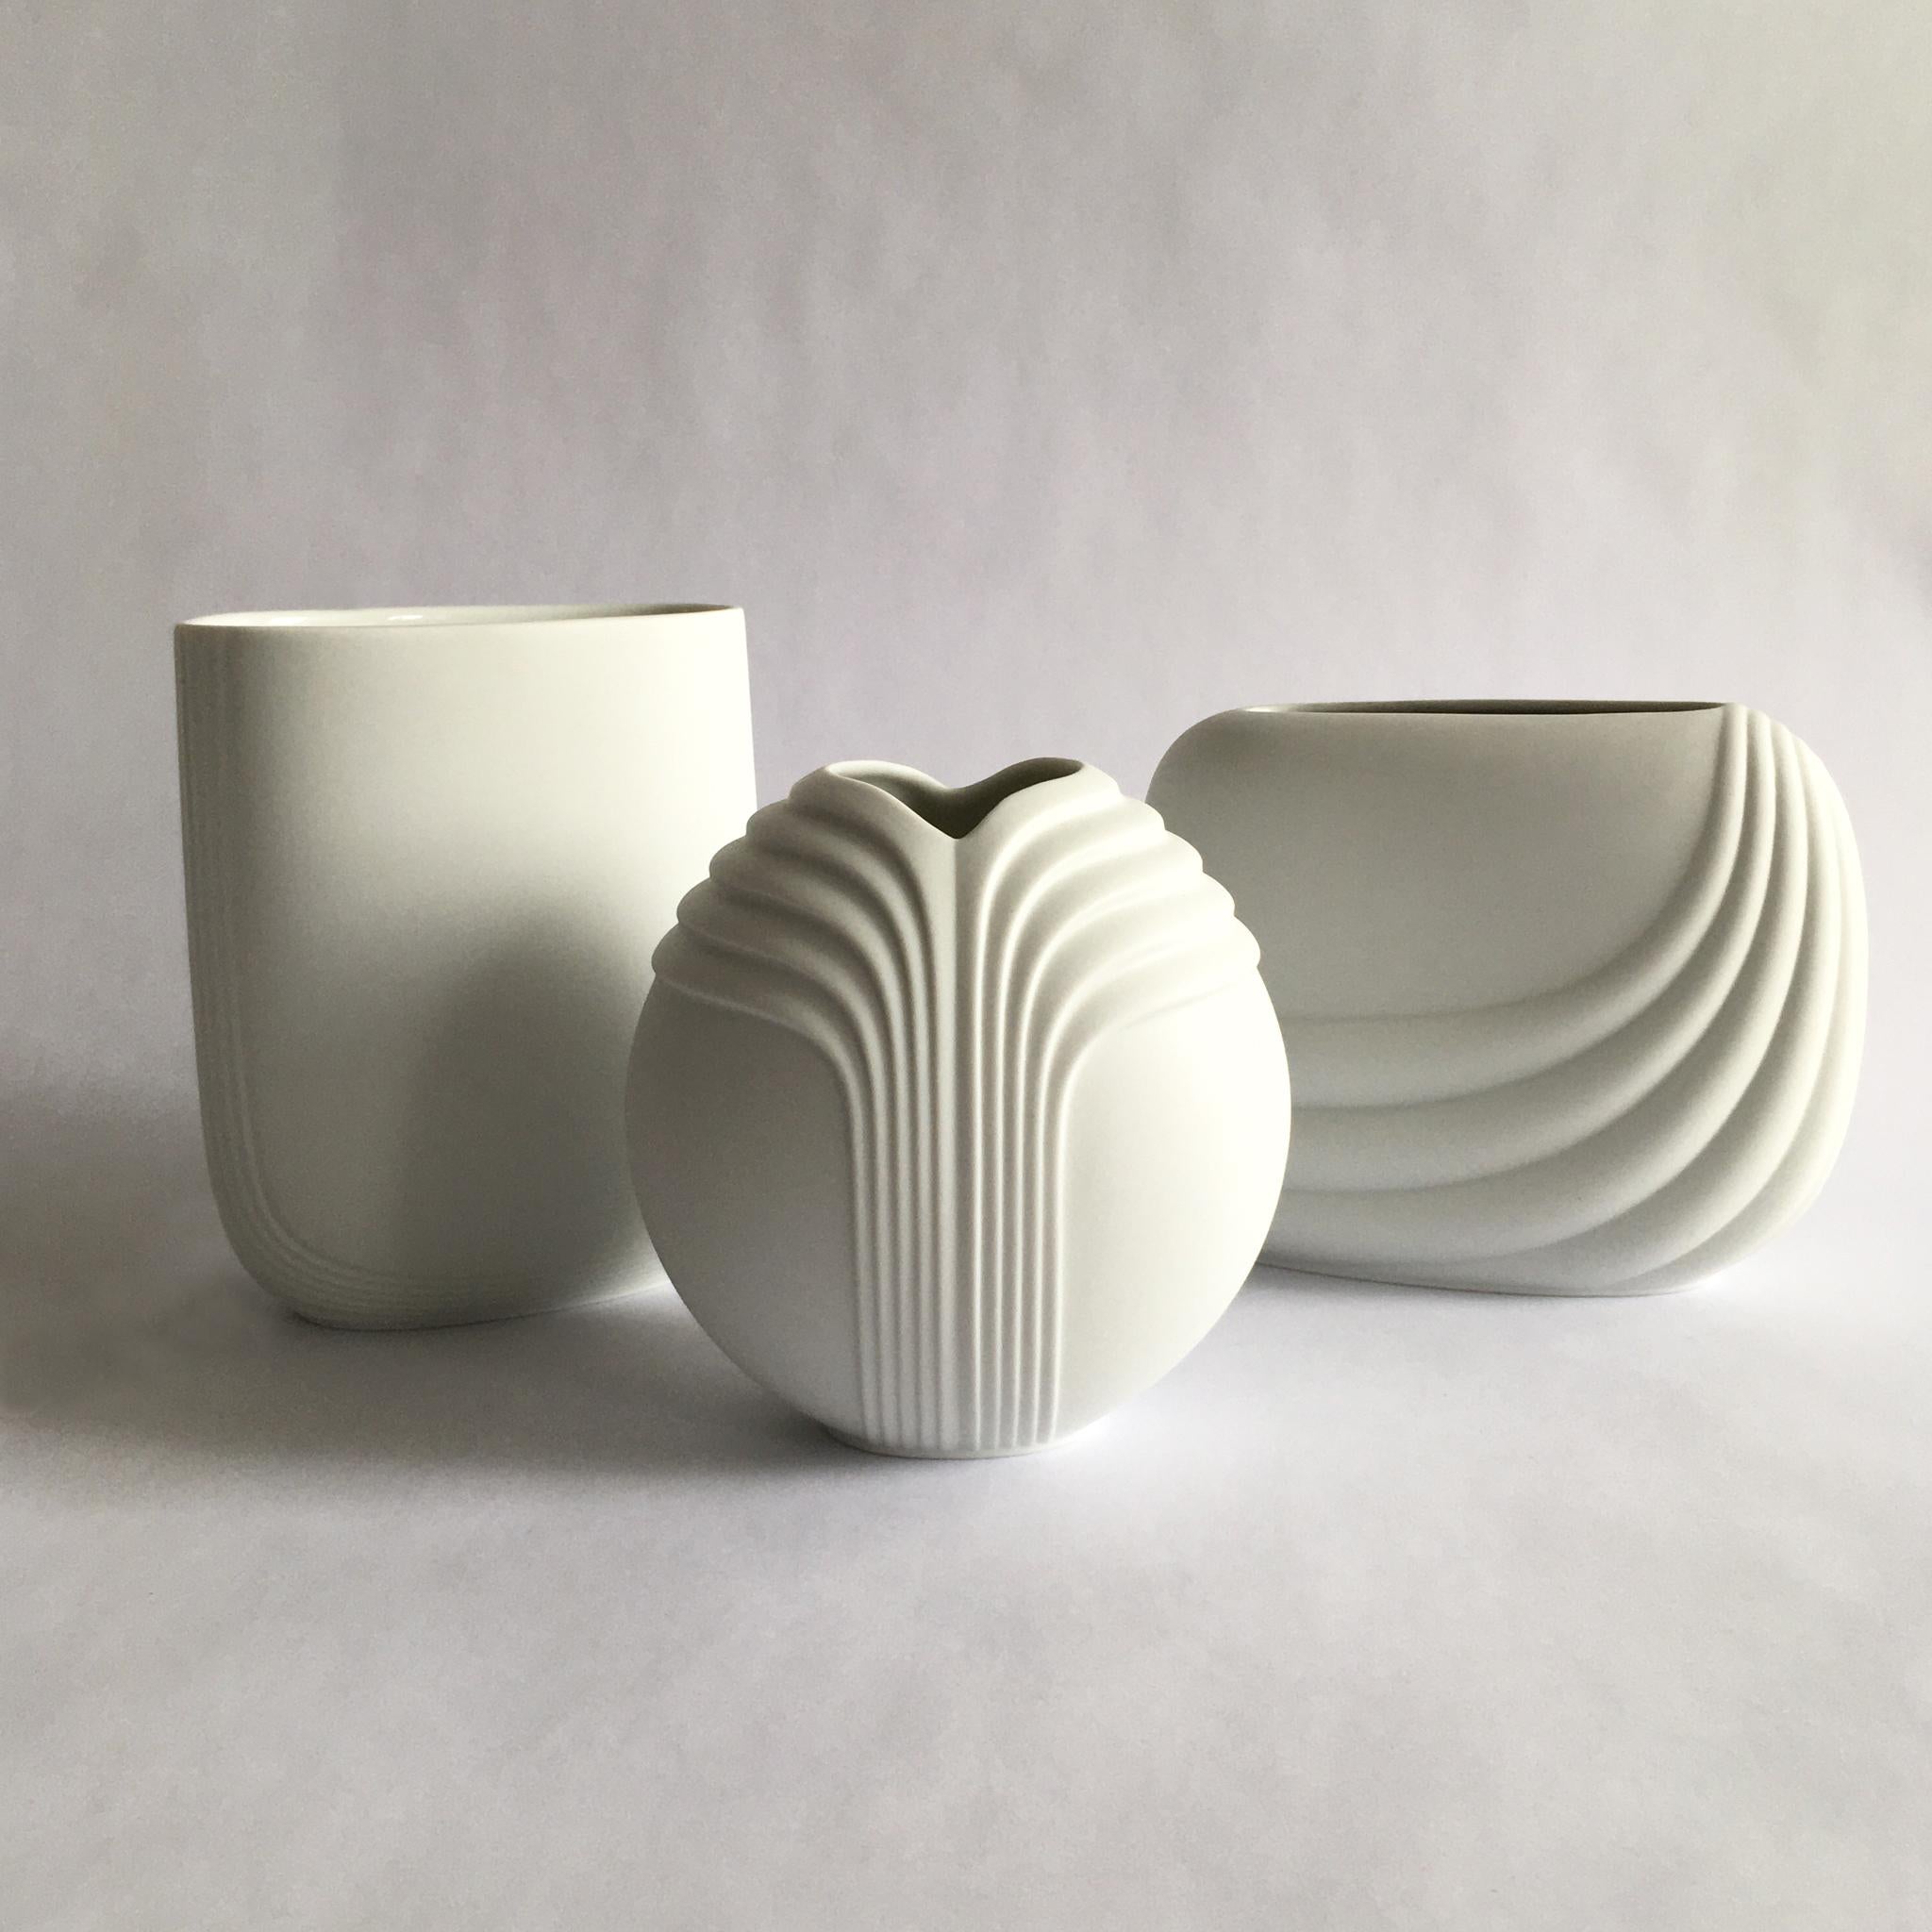 Unglazed Rosenthal Studio Line White Porcelain Bisque Vase by Uta Feyl, Circular Shape